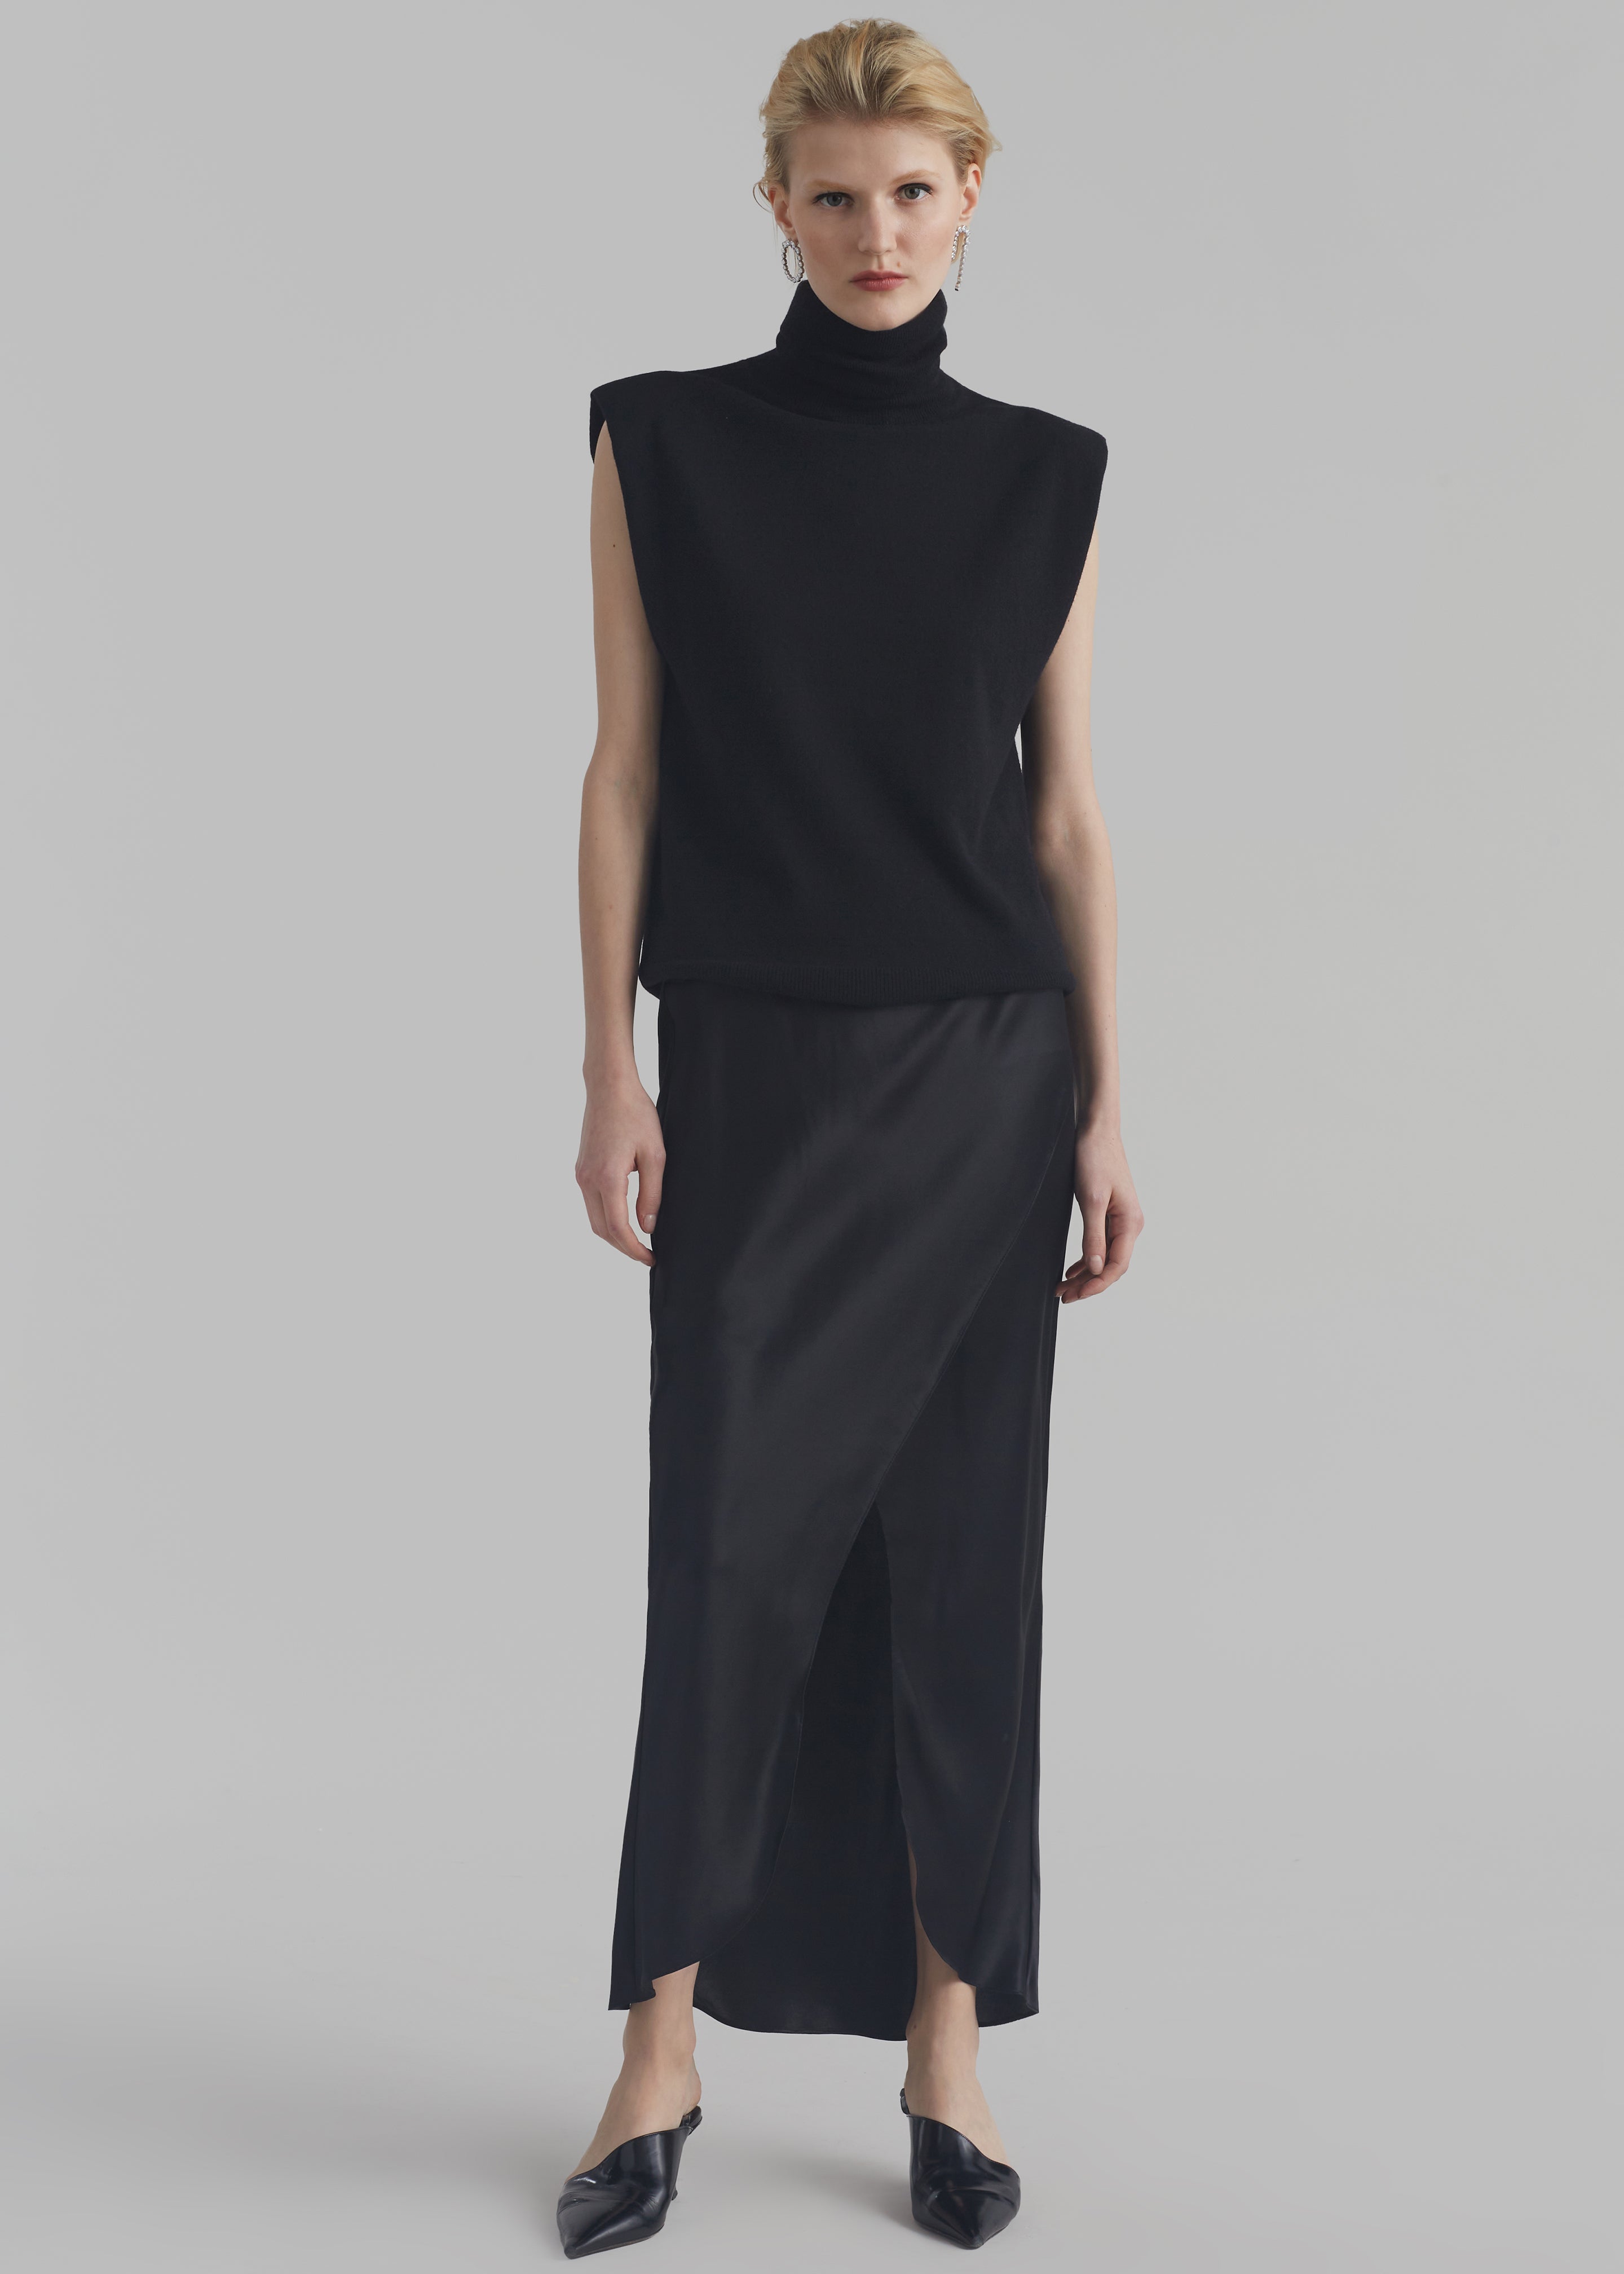 The Garment Catania Skirt - Black - 1